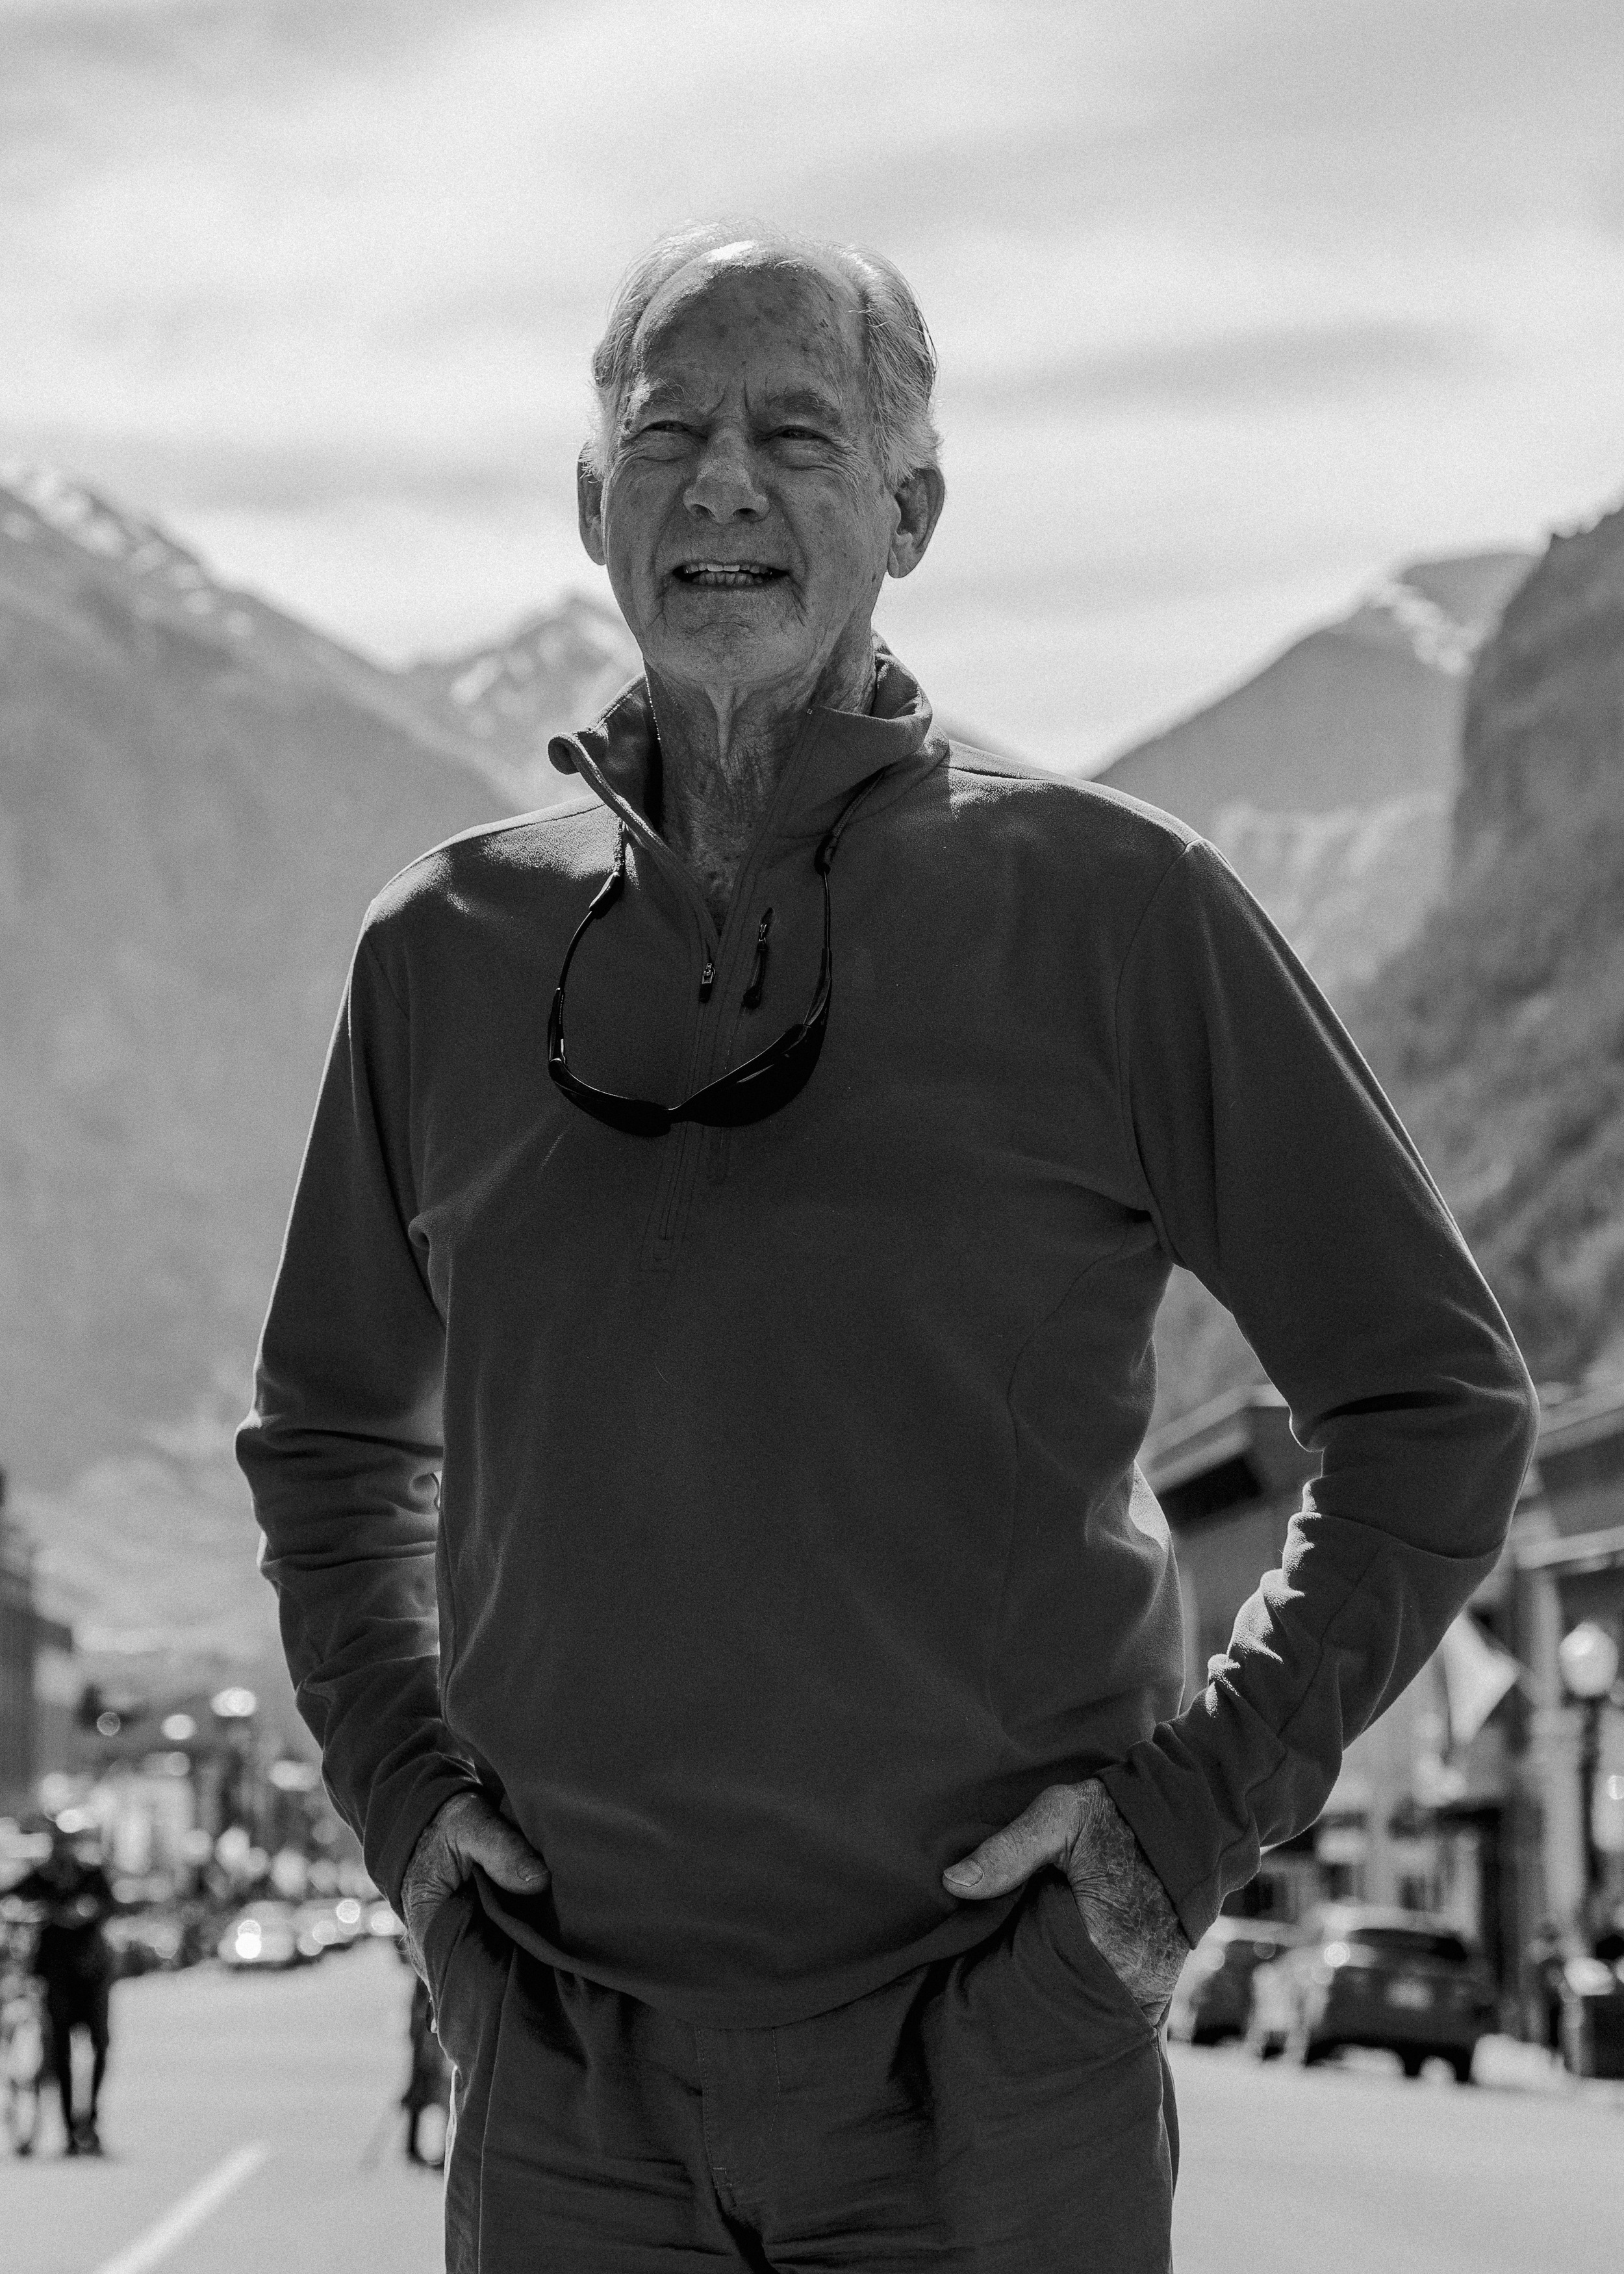 Jim Whittaker—1st American to Summit Mt. Everest